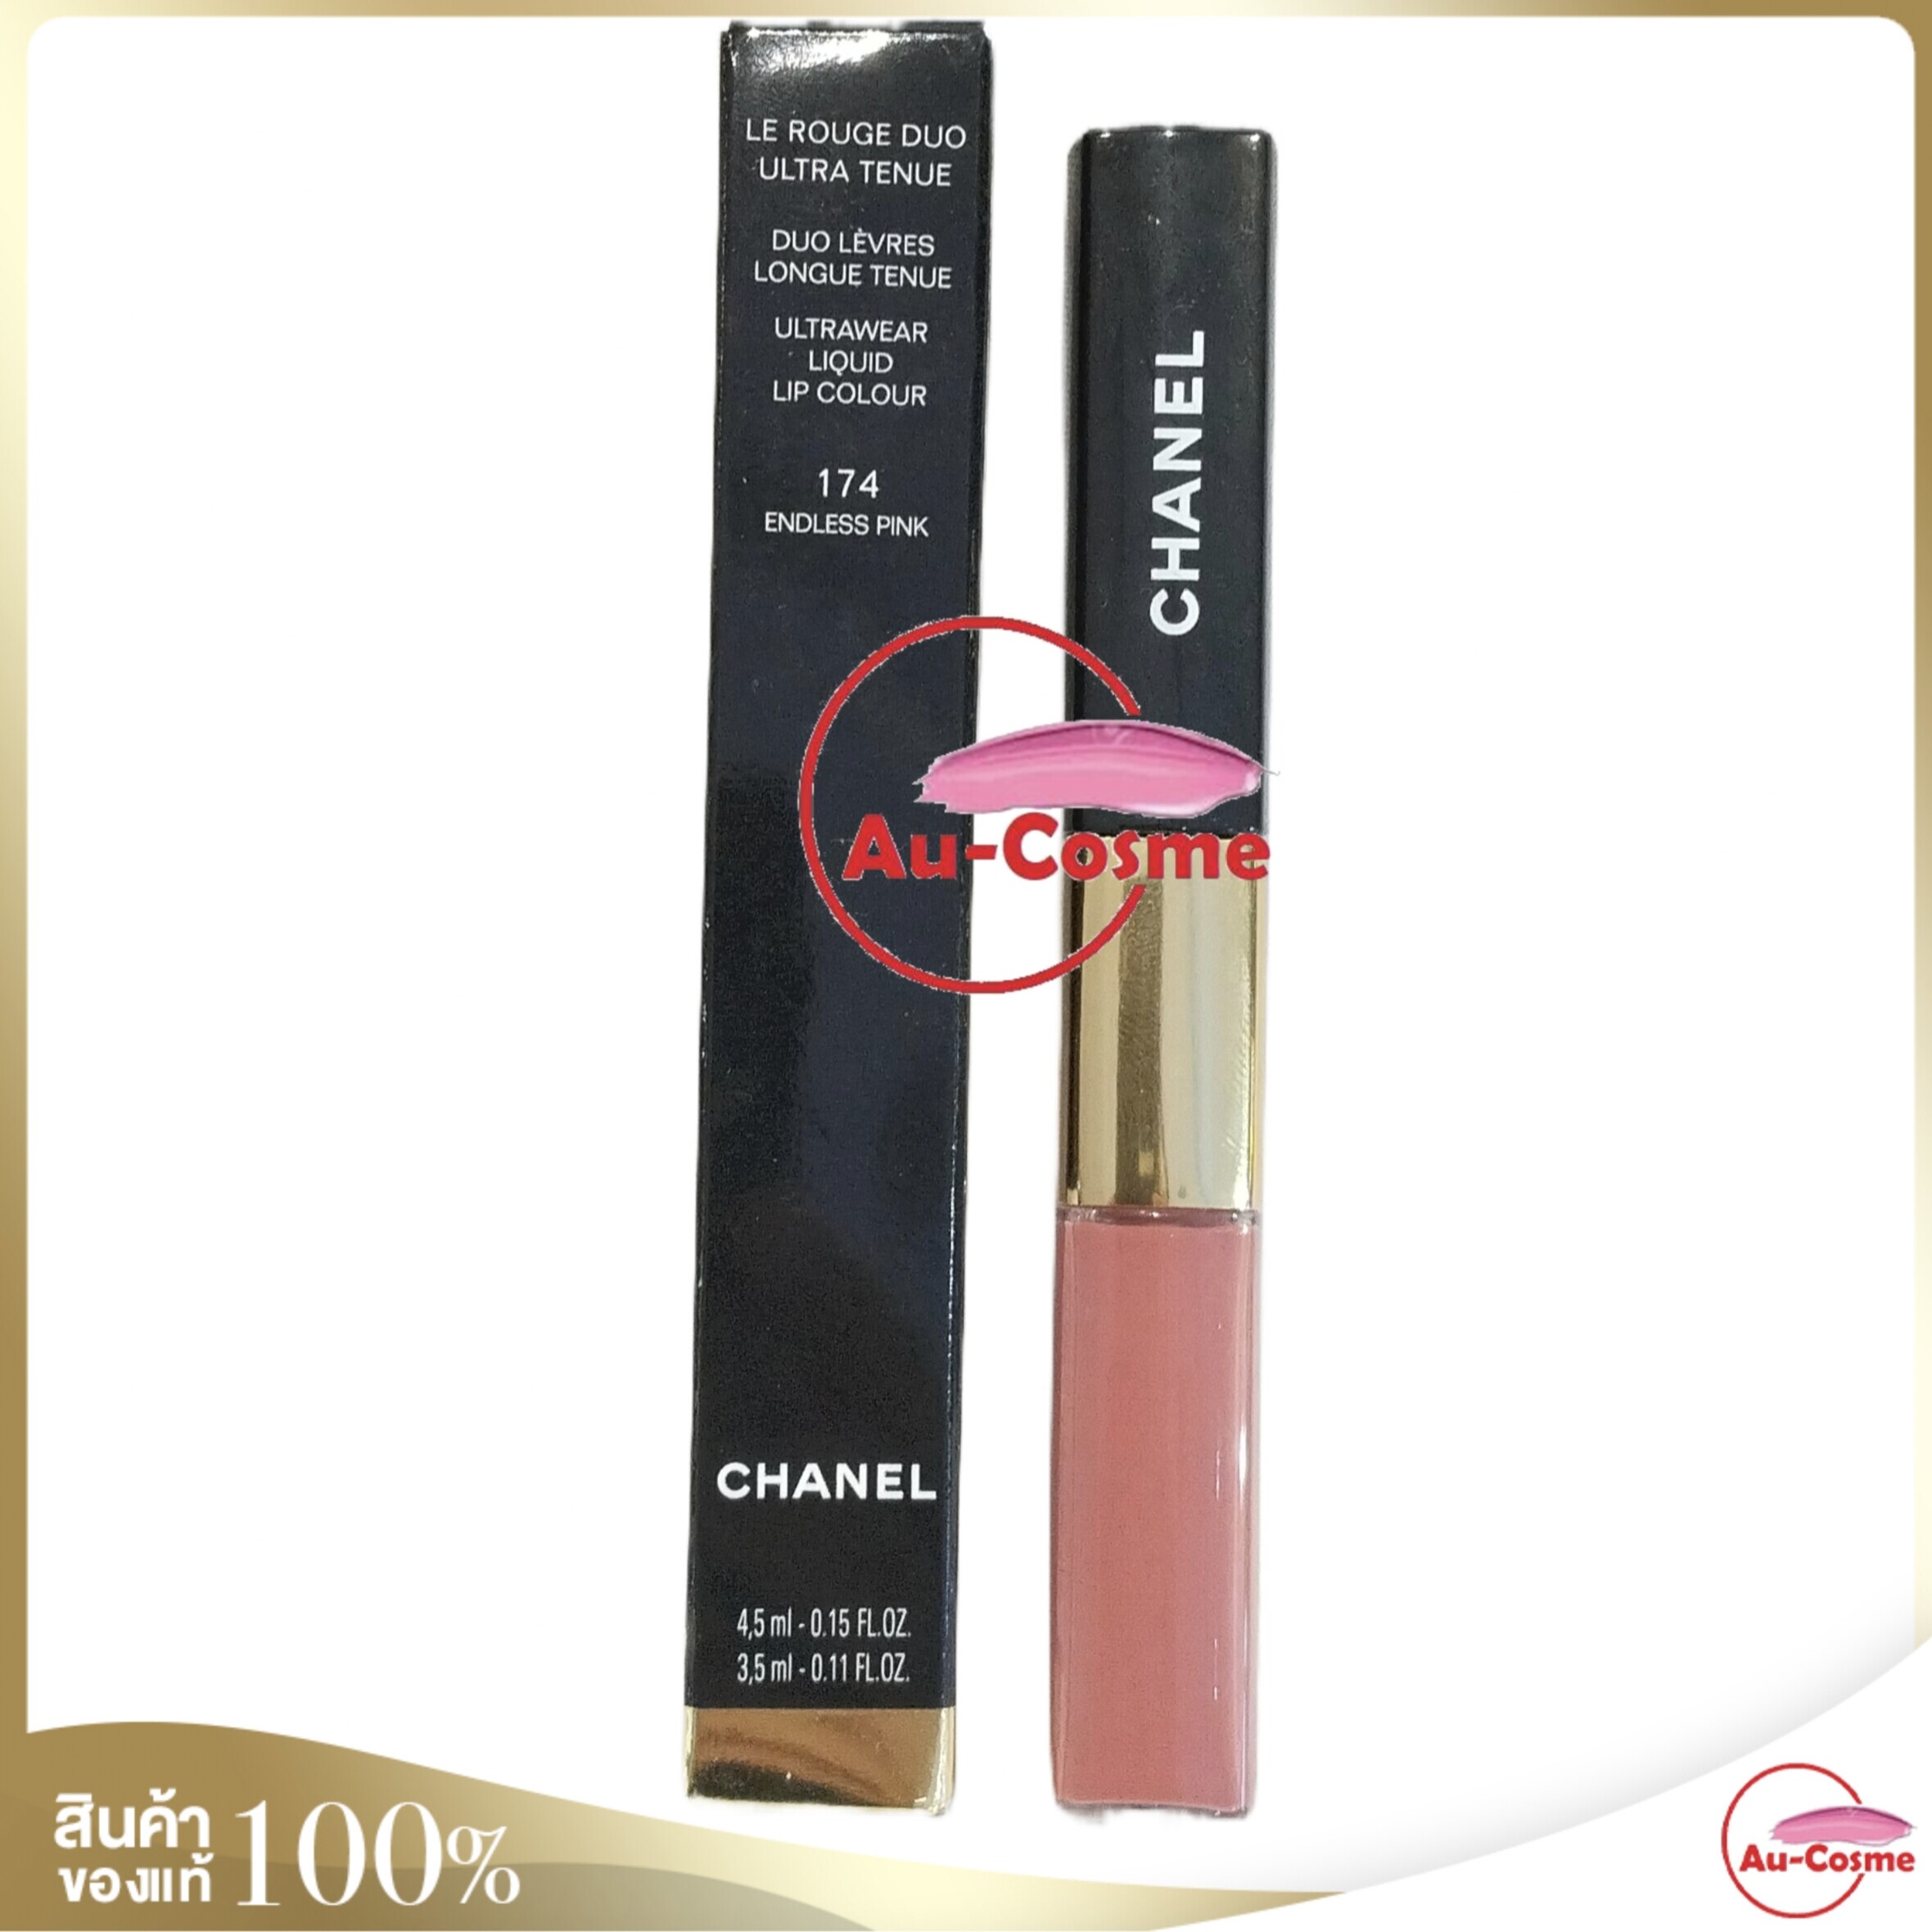 Chanel Rouge Double Intensite Ultra Wear Lip Colour: 5 Application